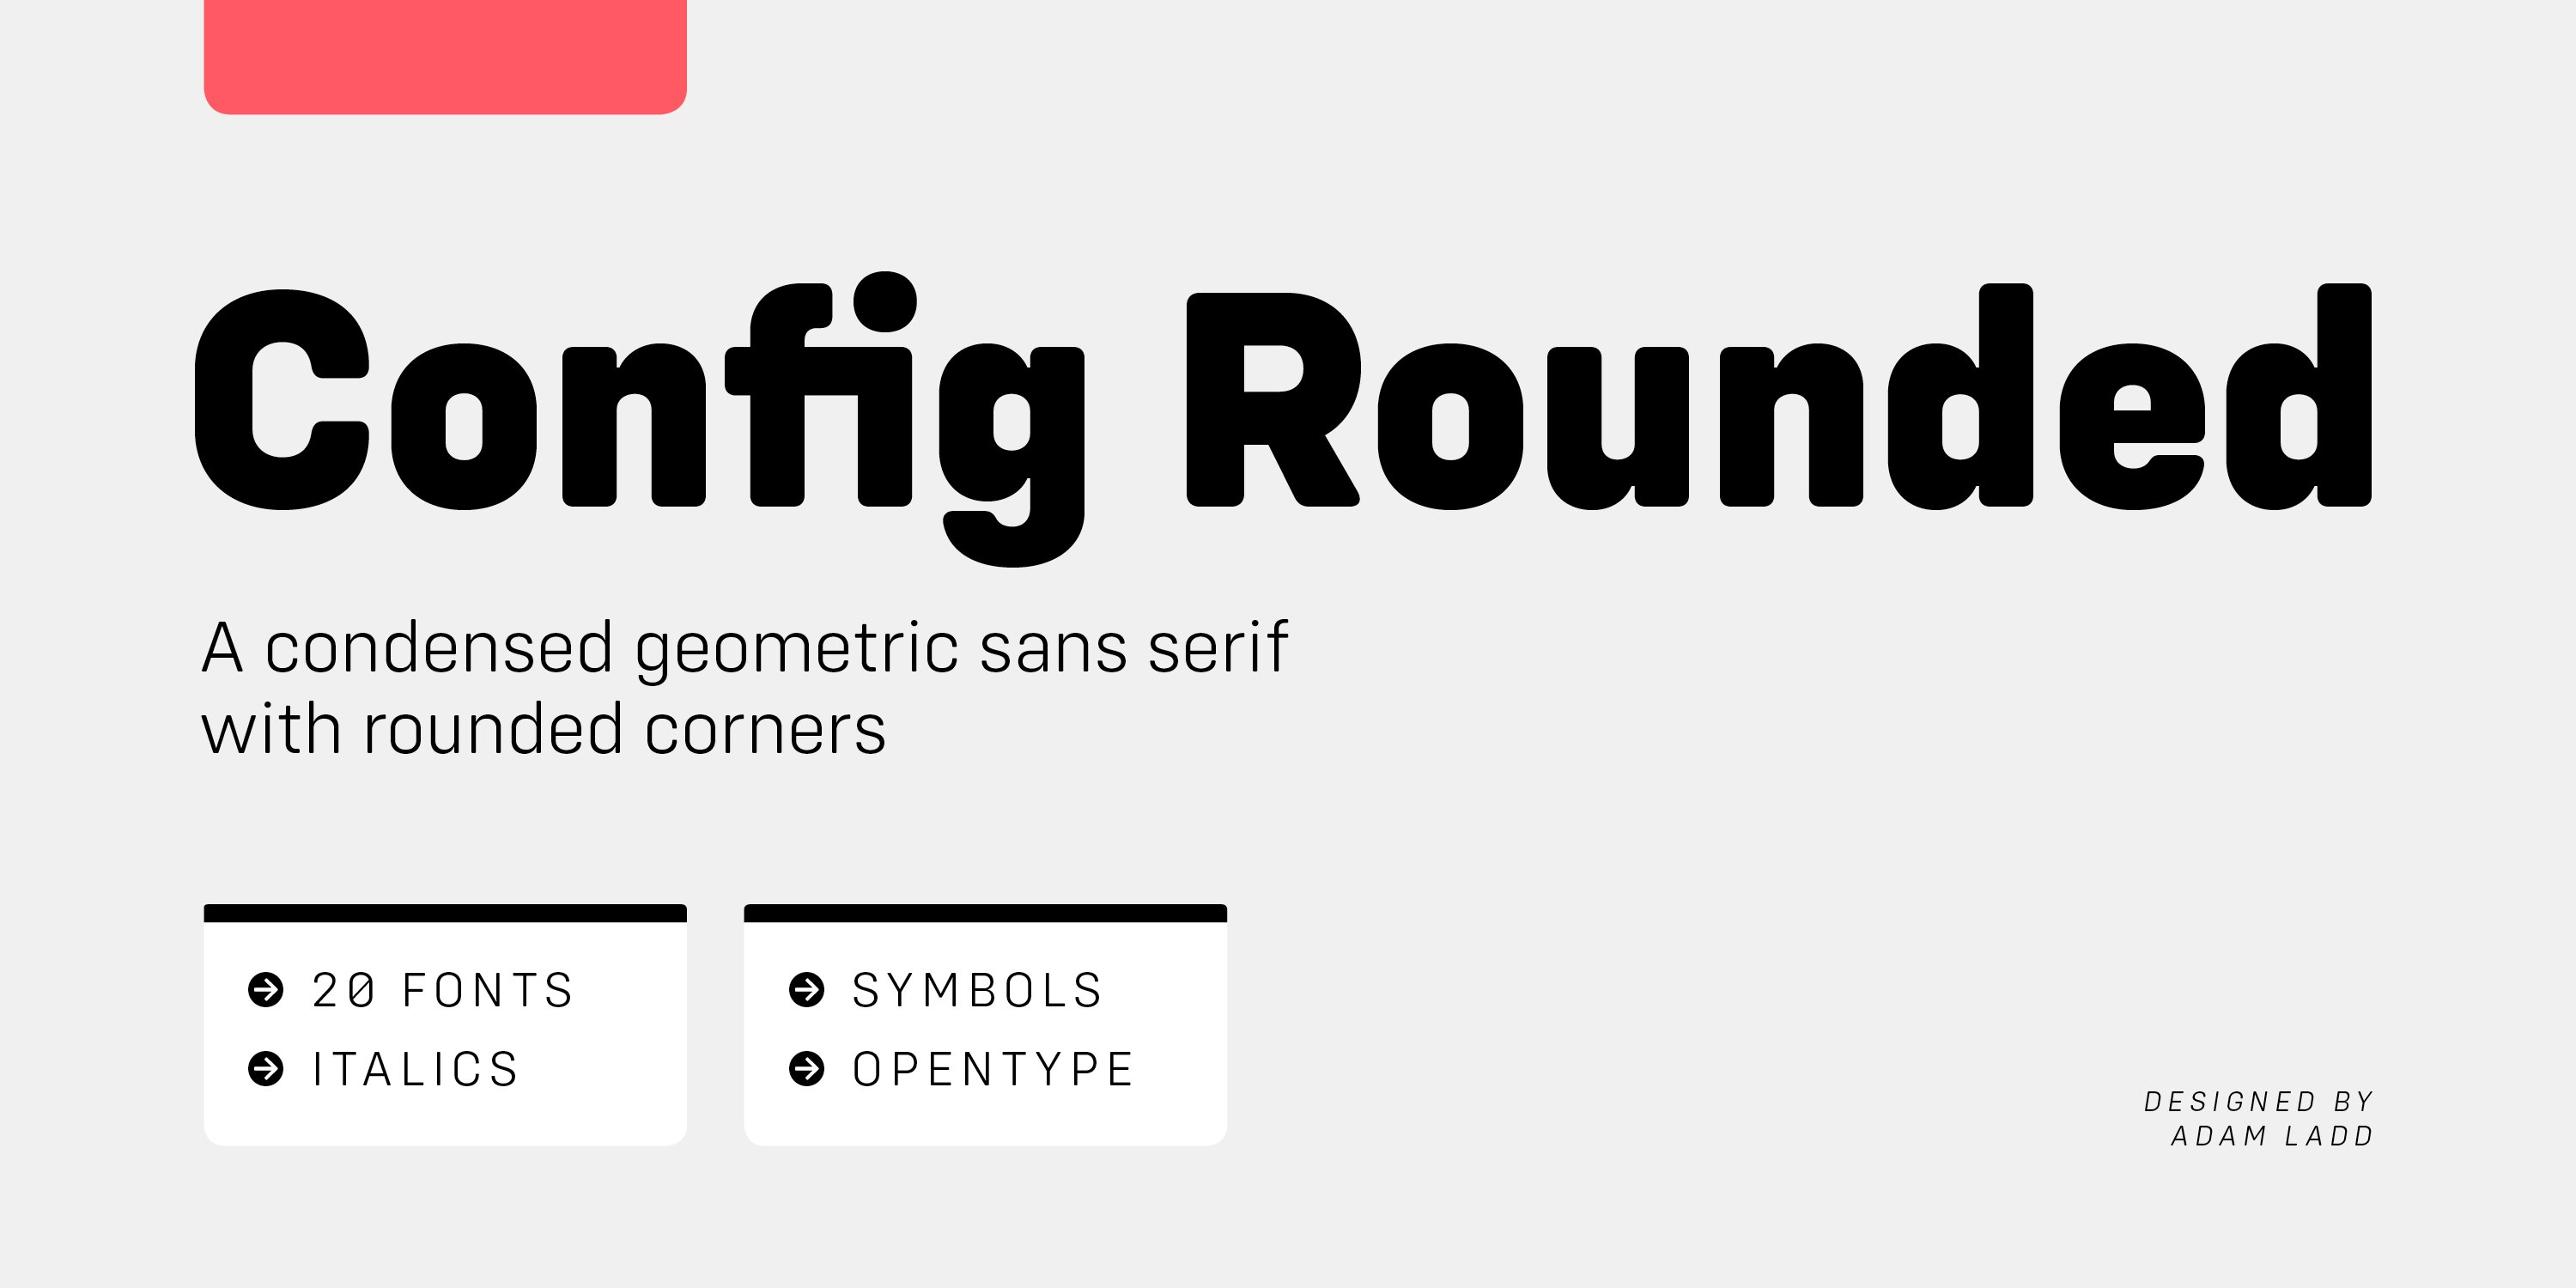 Sans serif html. Шрифт Sans Serif Condensed. Шрифт Round. Config шрифт. Corner New шрифт.